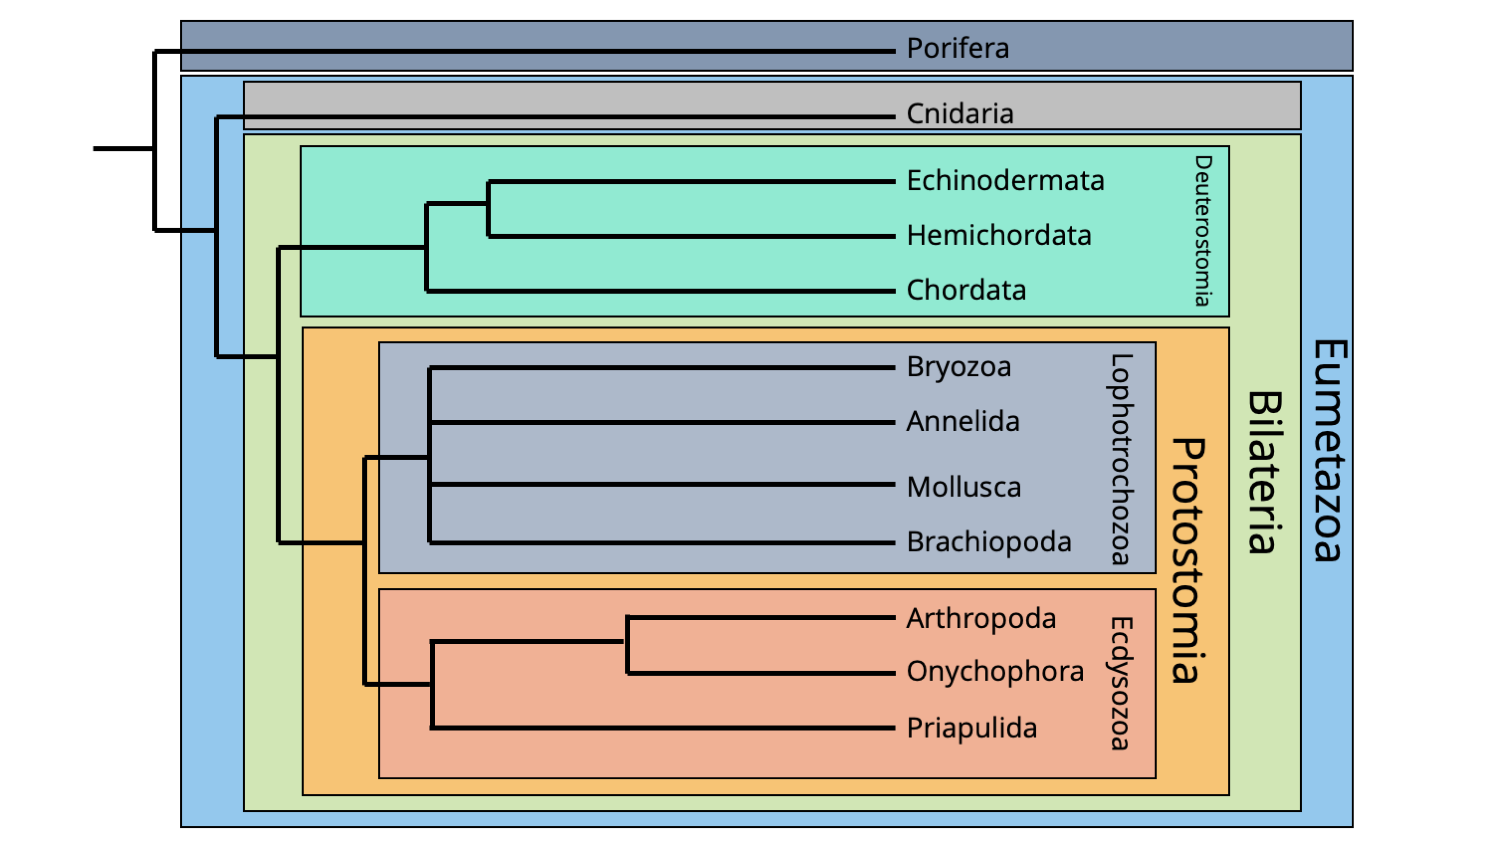 mammal orders phylogeny